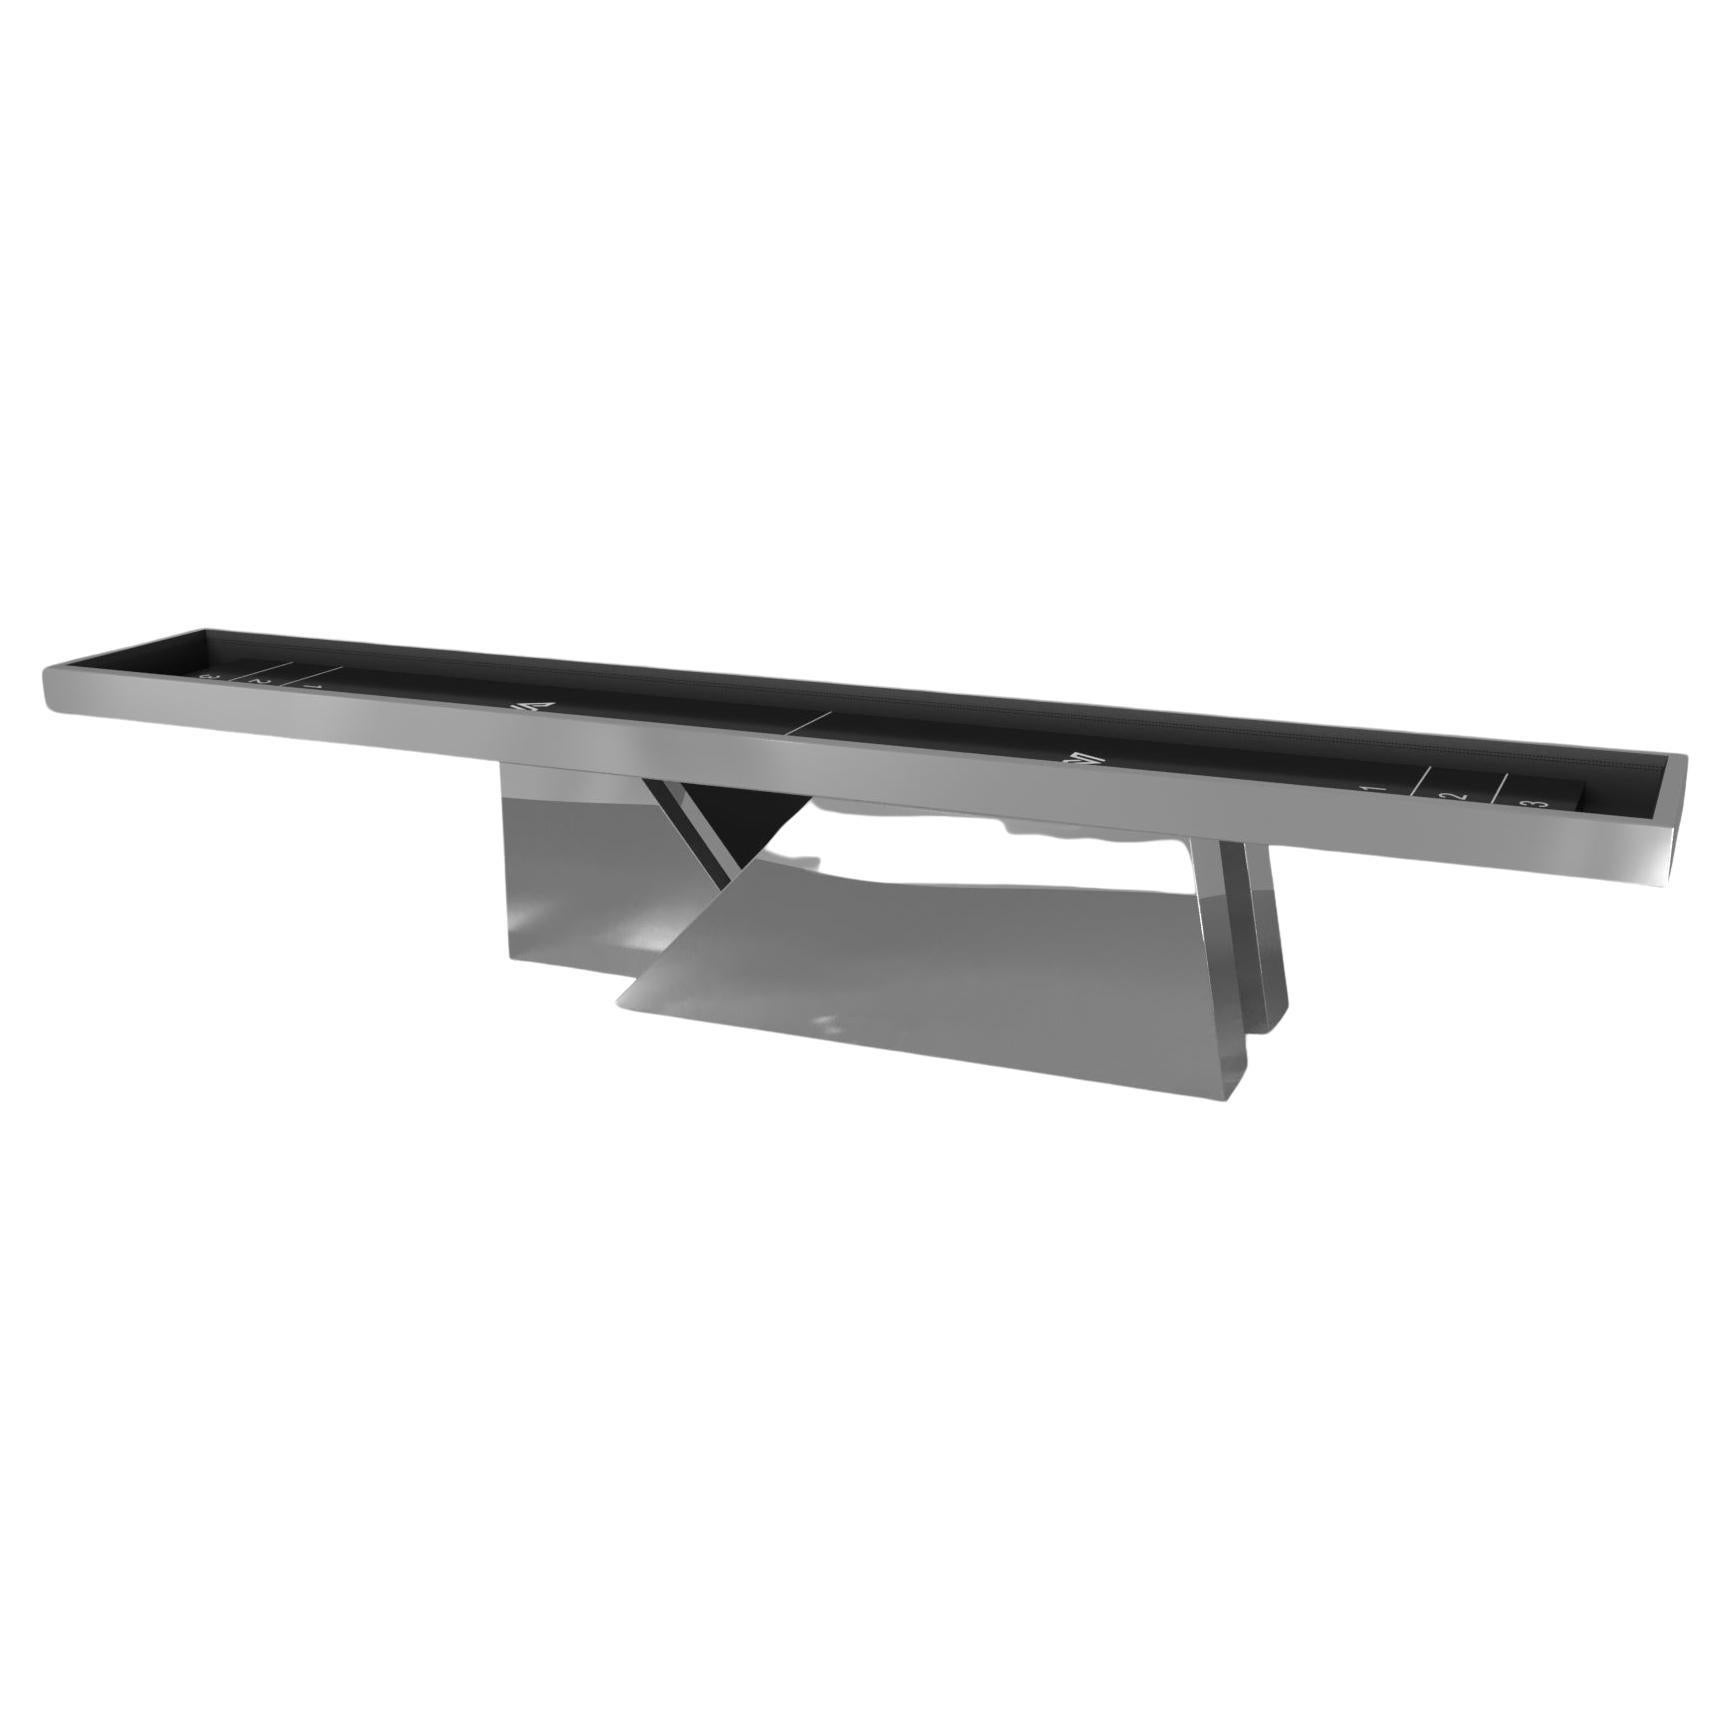 Elevate Customs Stilt Shuffleboard Tables/Stainless Steel Sheet Metal in 18'-USA For Sale